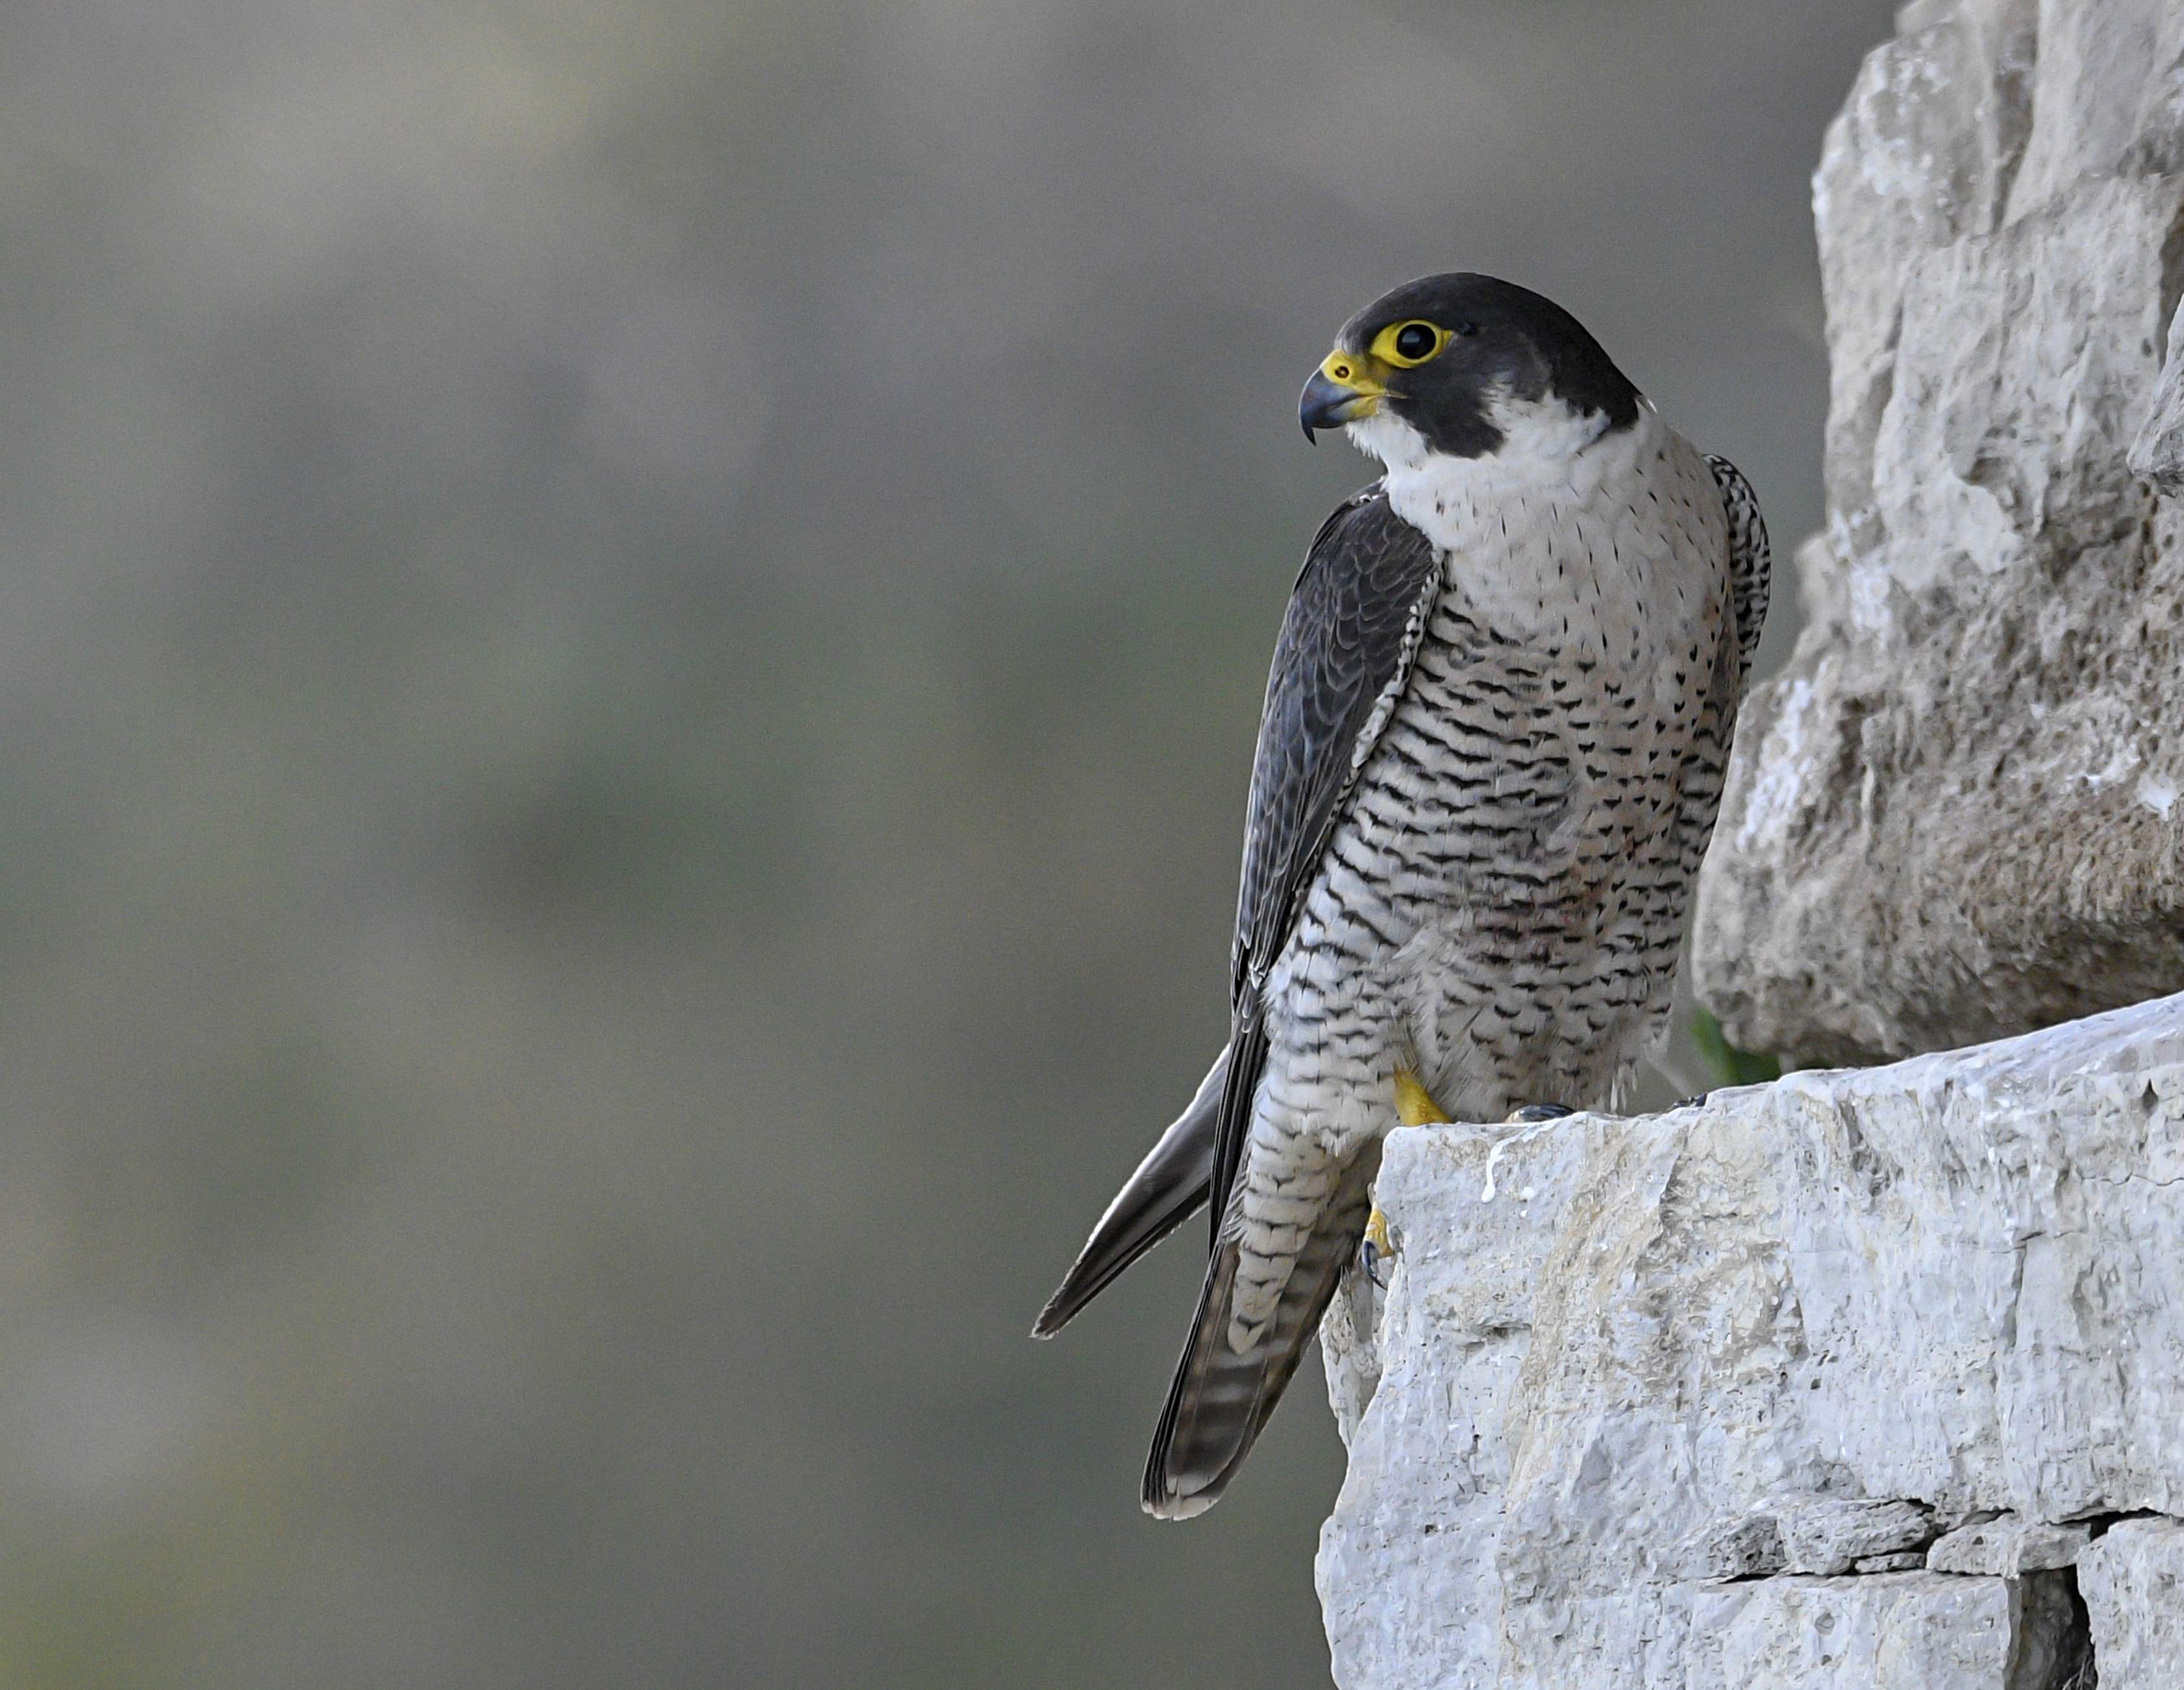 Peregrine falcon perched on cliff ledge